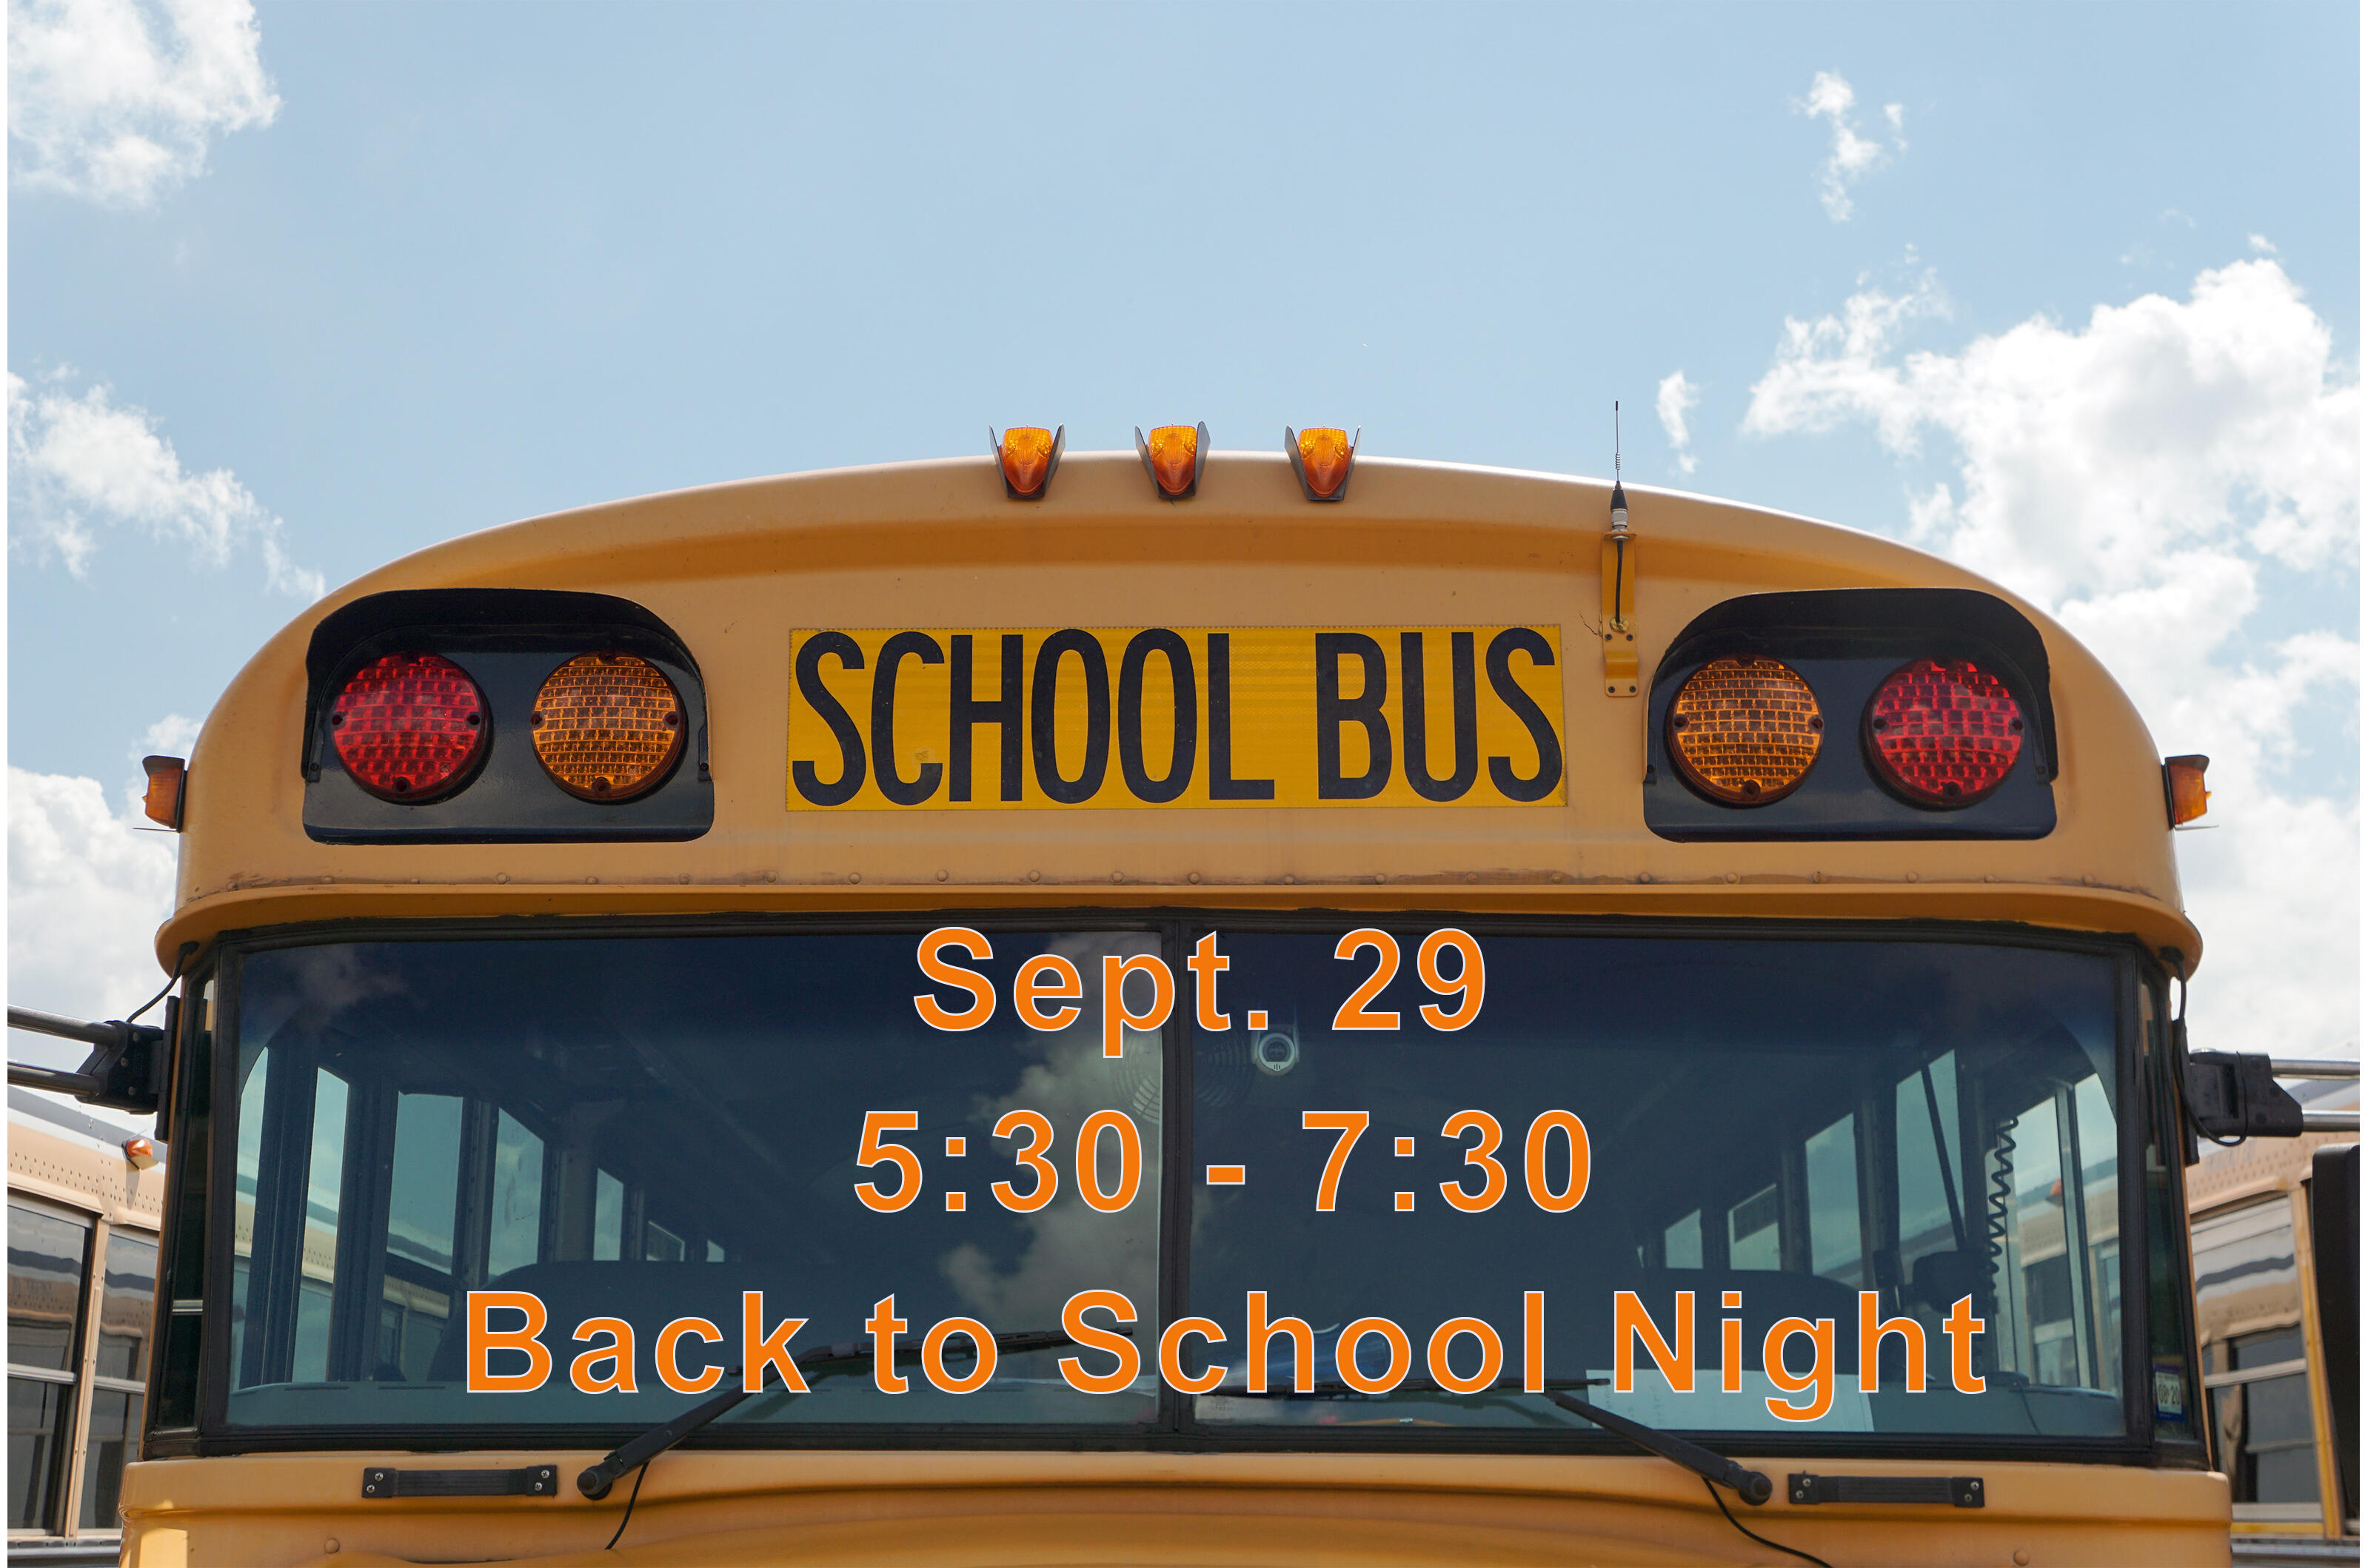 Back to school night Sept 29